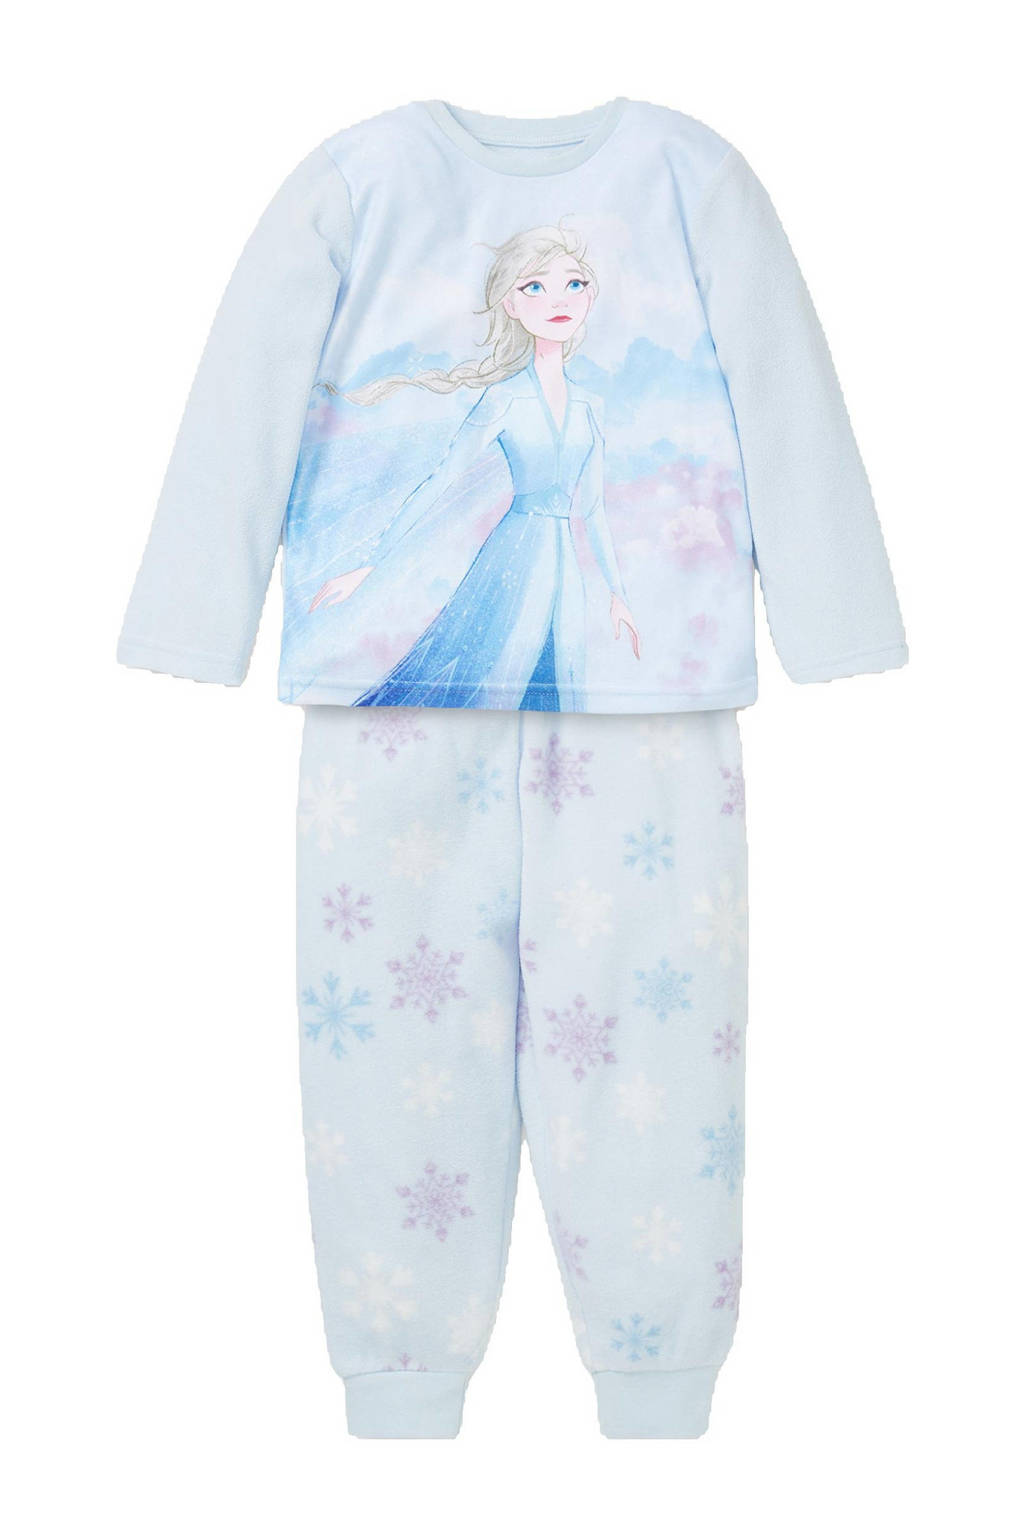 coupon Hoogland mot C&A Frozen pyjama Frozen lichtblauw | wehkamp